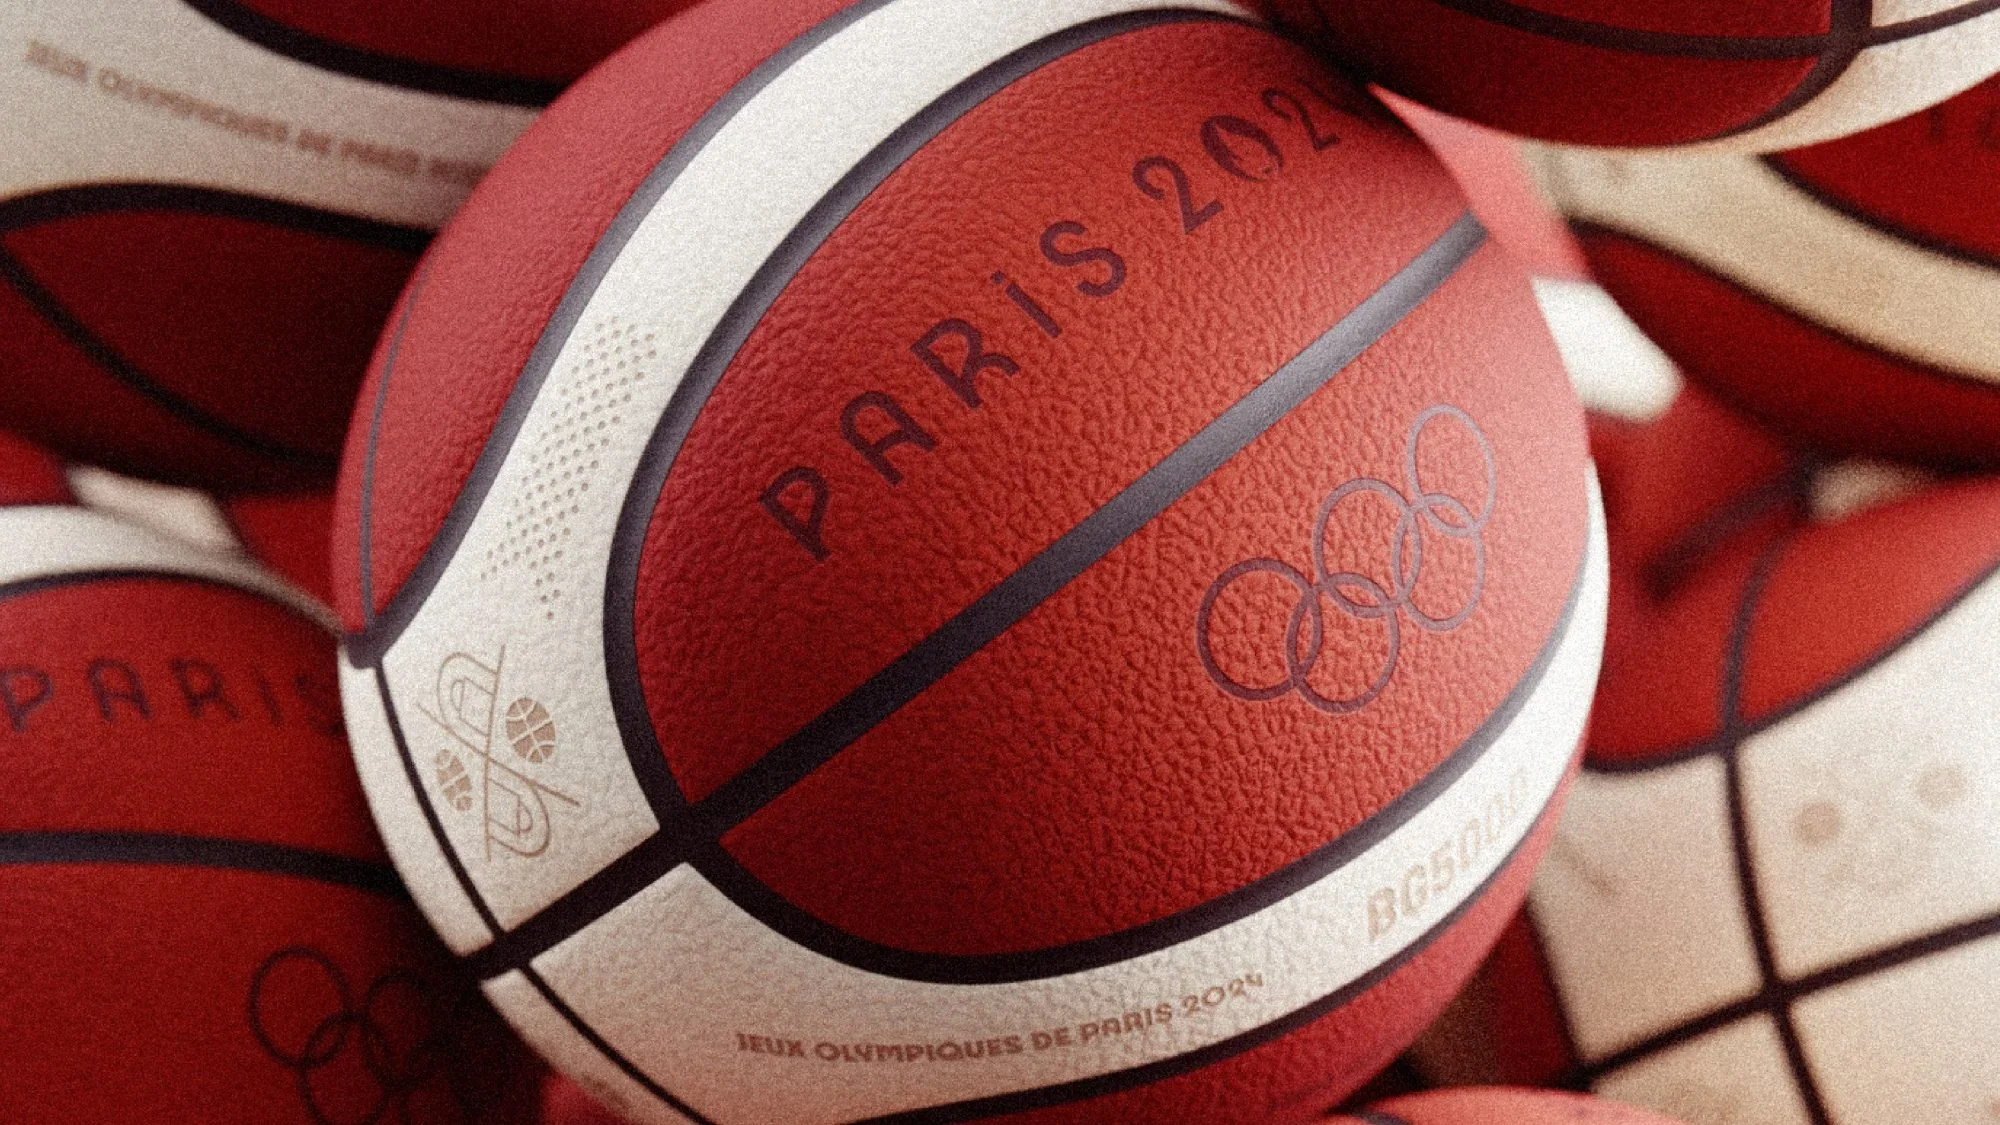 Paris 2024 Olympics logo printed on basketball